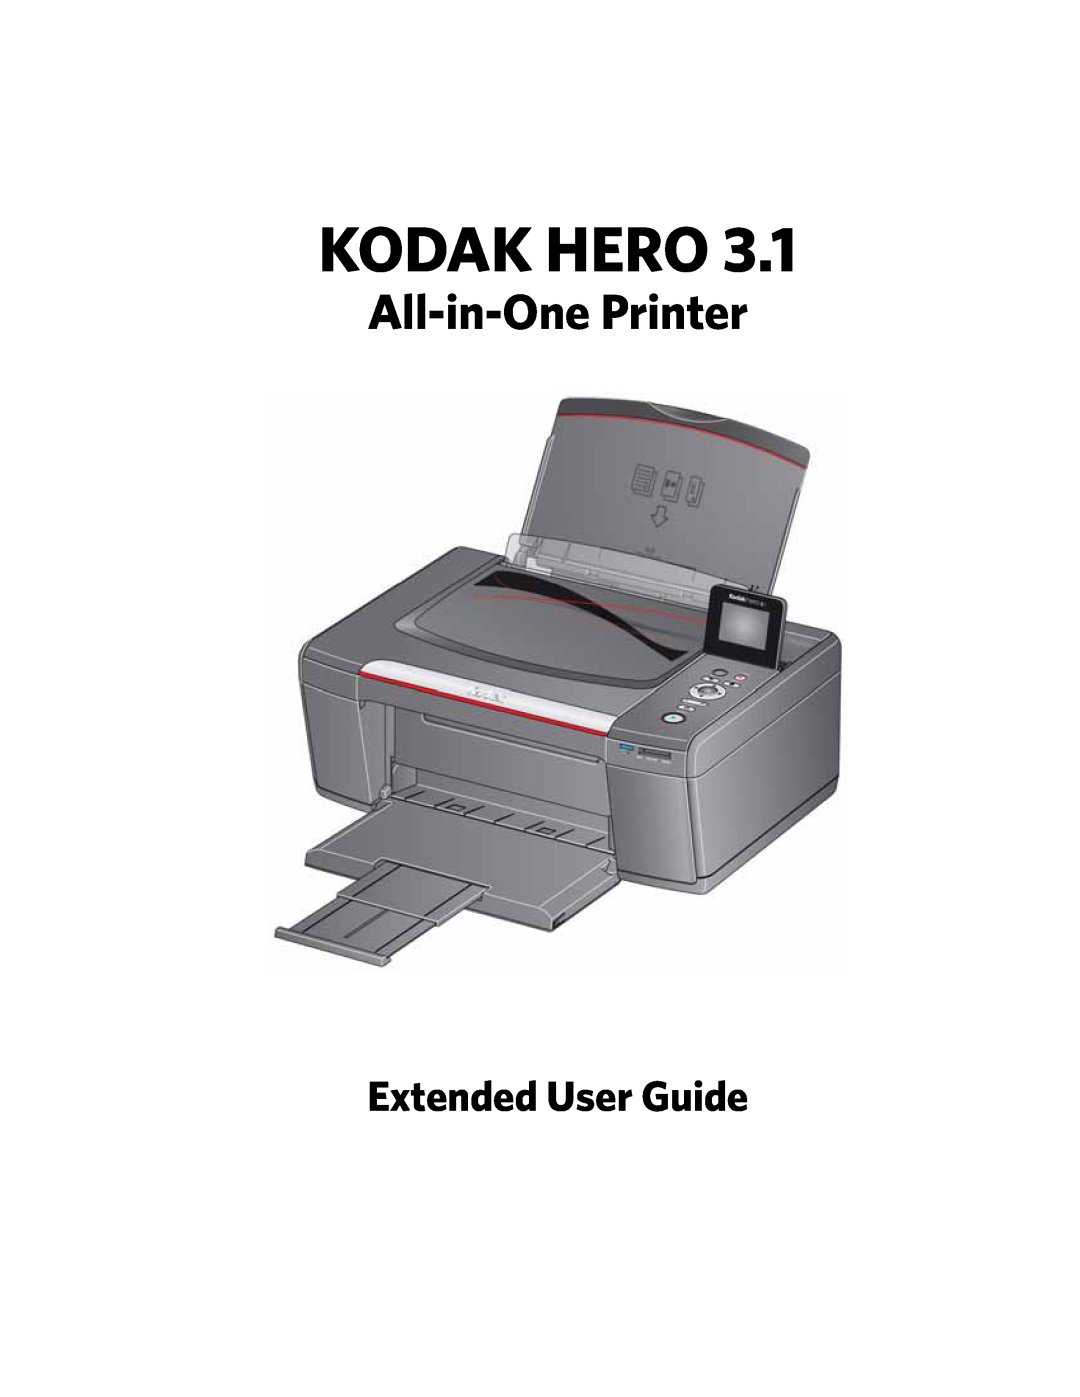 Kodak 3.1 manual Extended User Guide, Kodak Hero, All-in-One Printer 